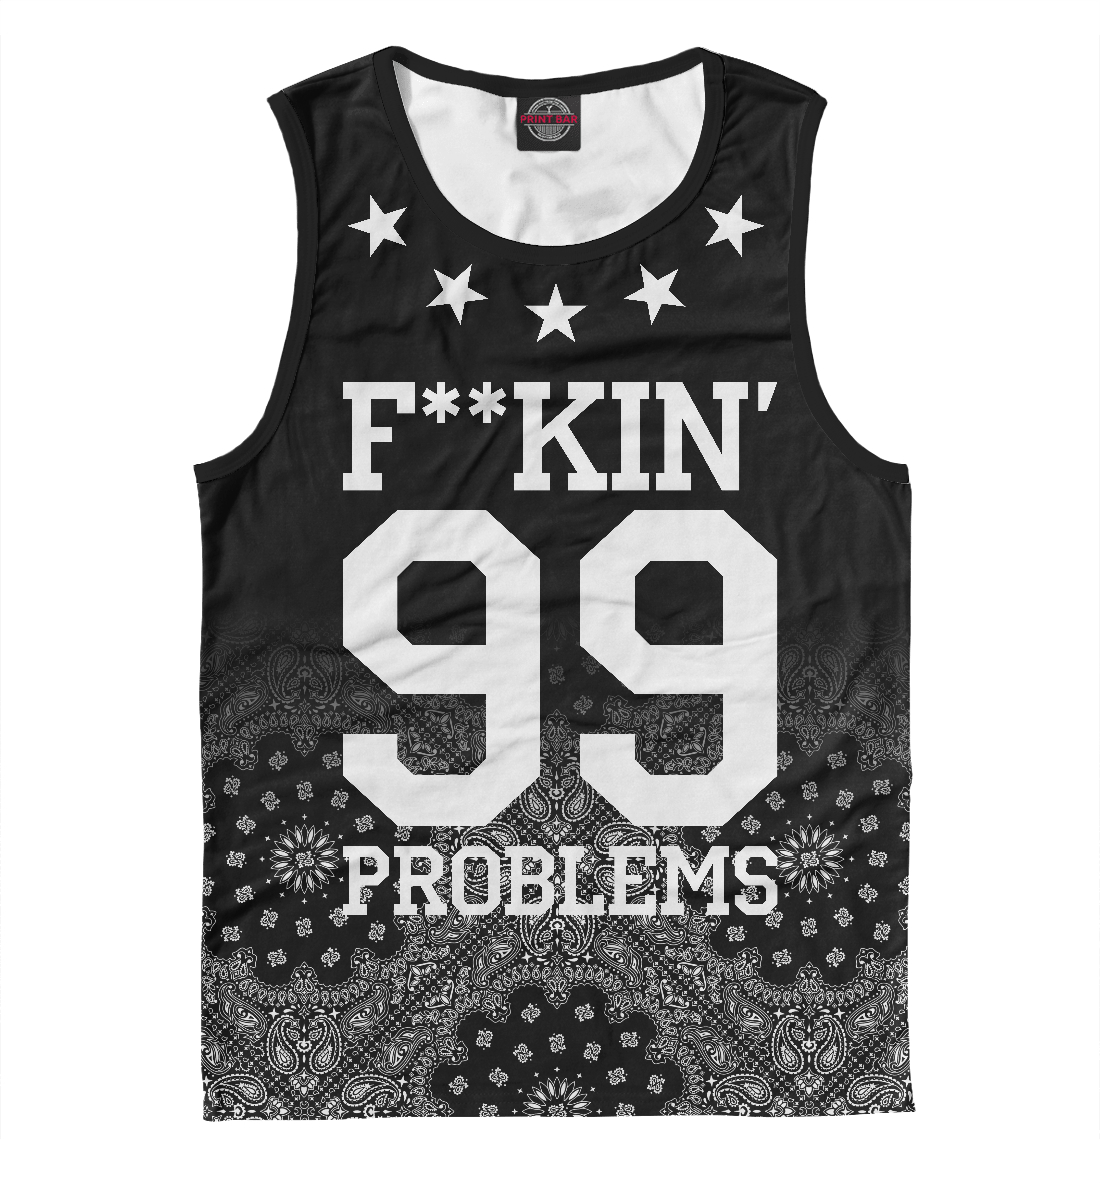 Problems hugo. 99 Problems футболка. 99 Problems аватарка. Майка f.p.g. 99 Problems фирма шкотки.